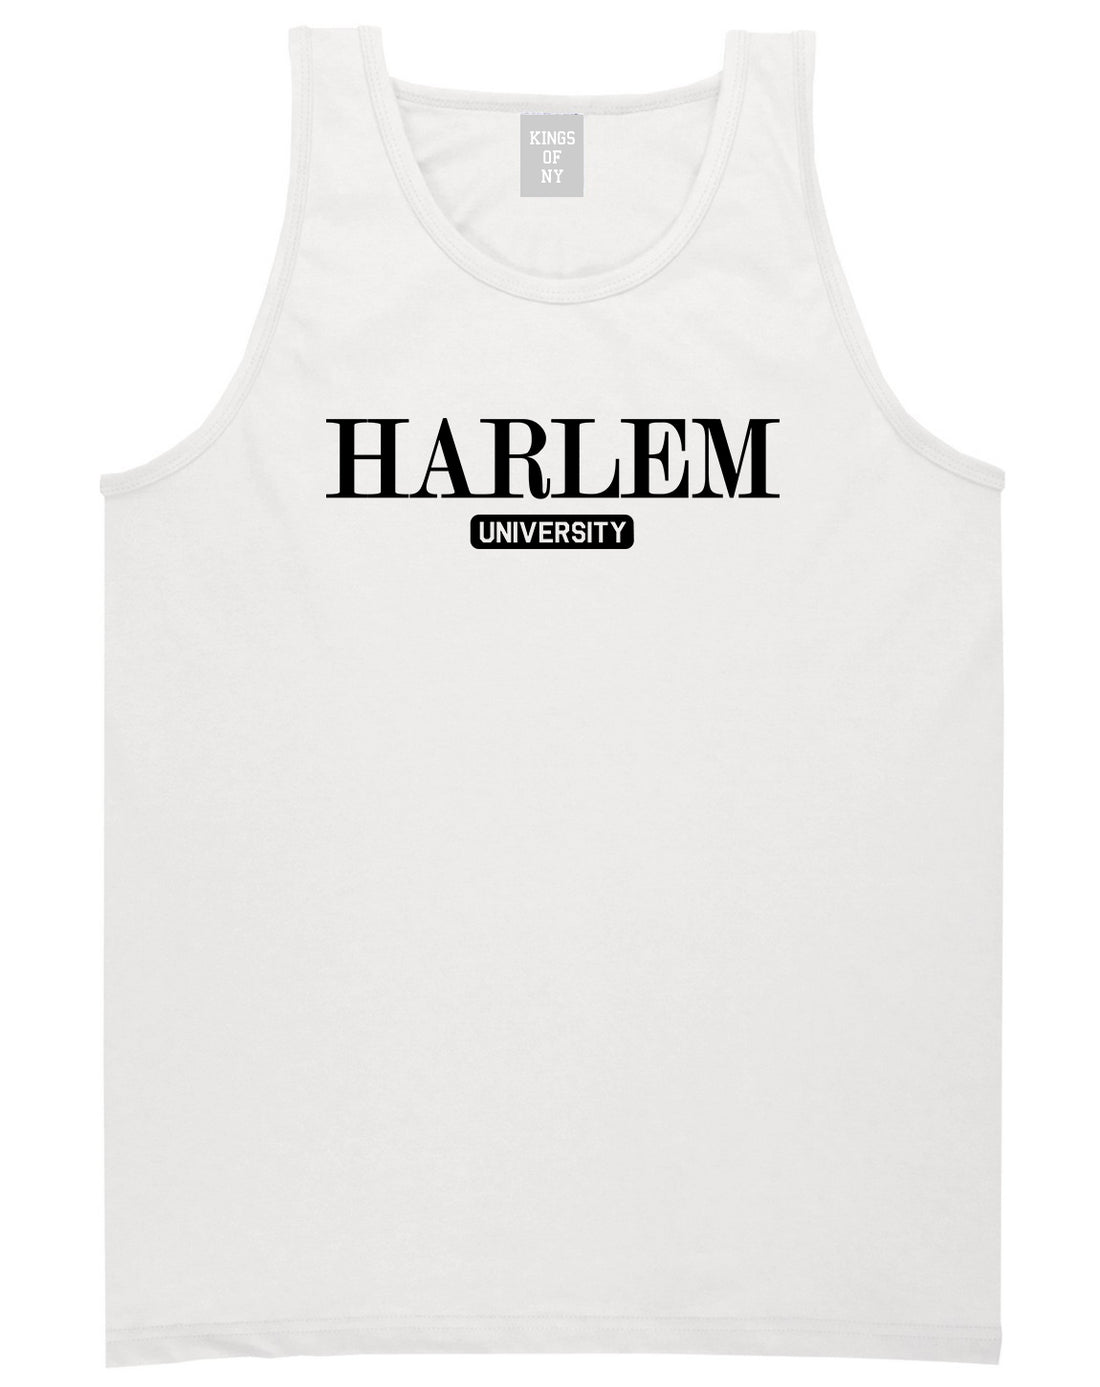 Harlem University New York Mens Tank Top T-Shirt White